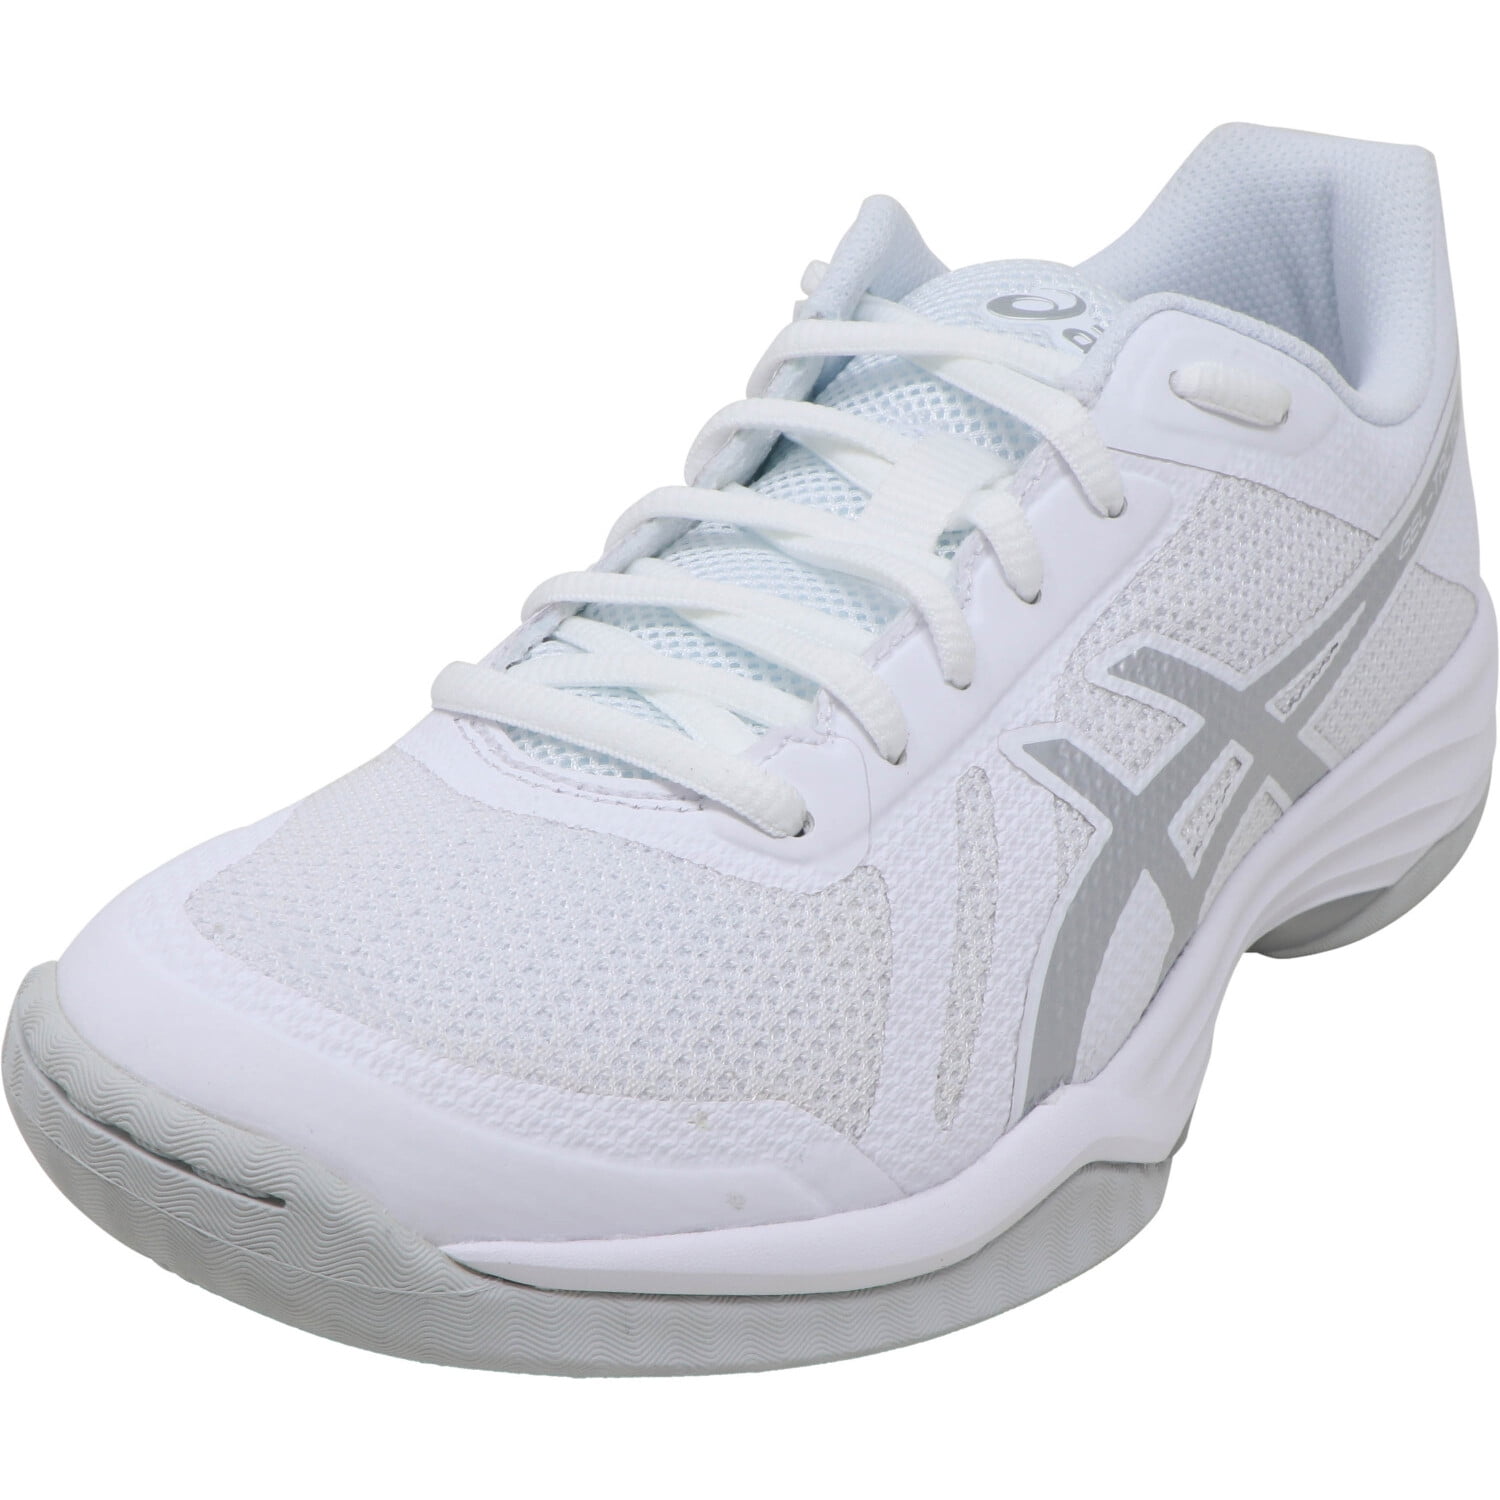 Asics Women's Gel-Tactic White / Silver Ankle-High Tenni - 7M - Walmart.com